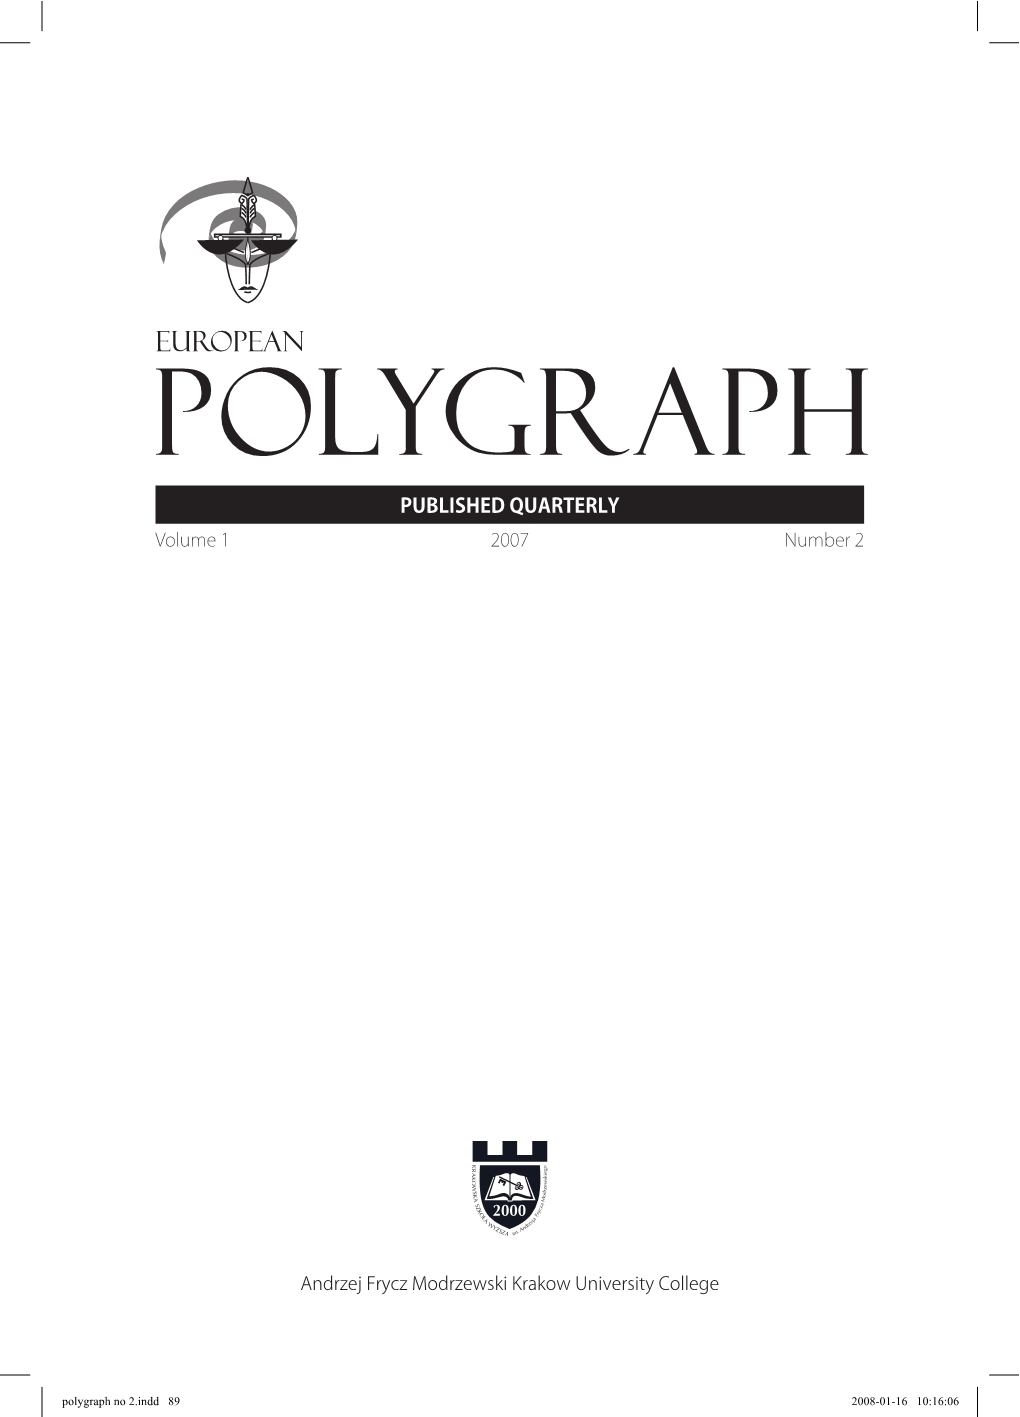 Polygraph in the Polish Secret Service